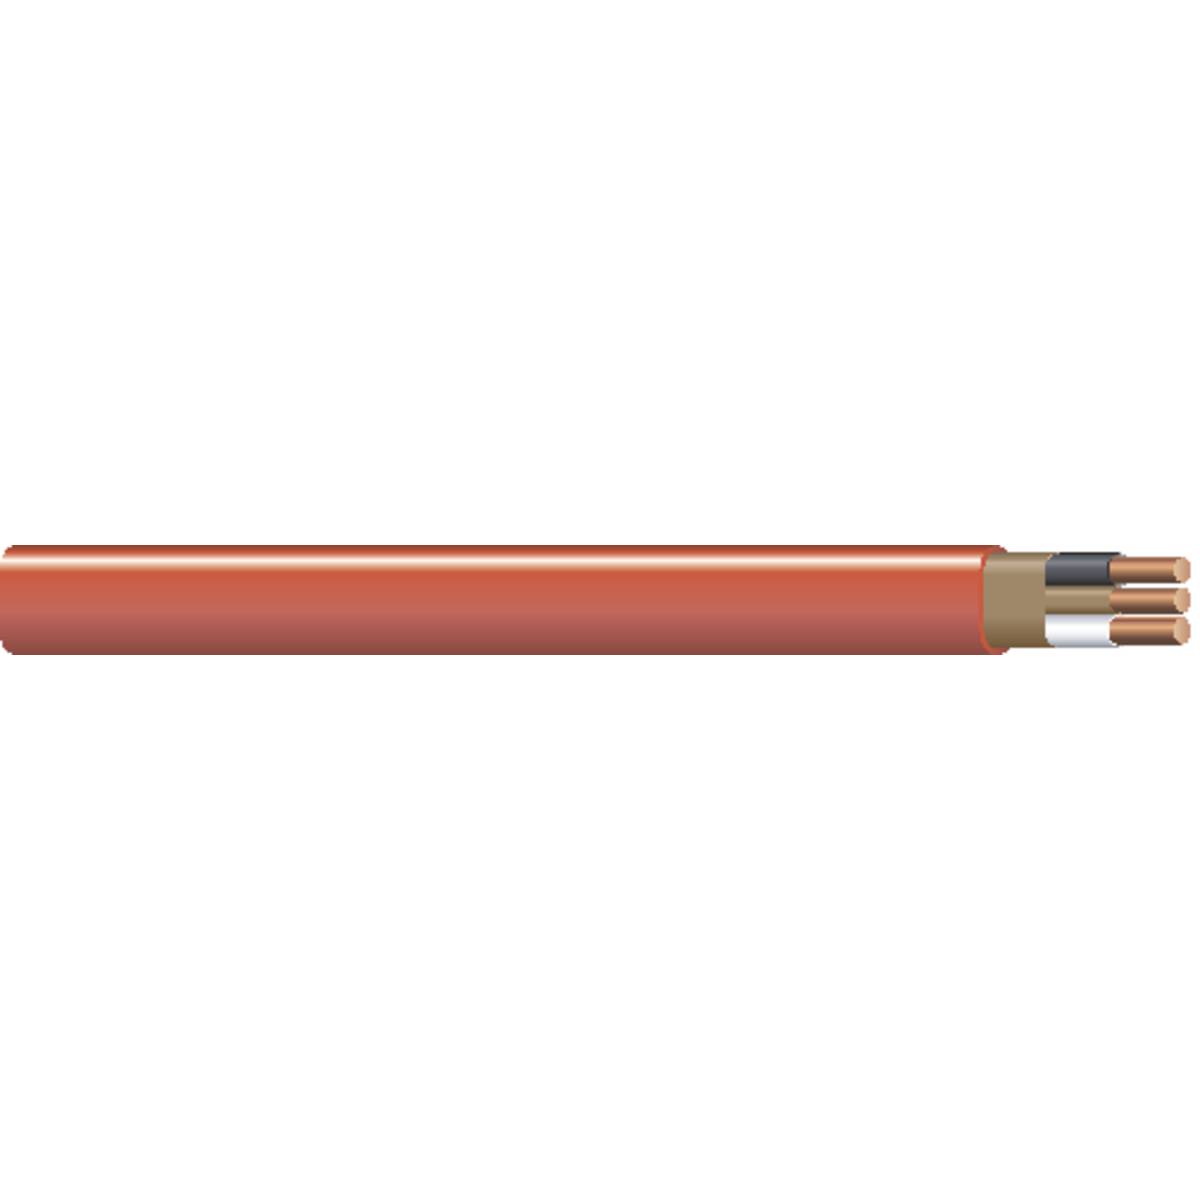 TC403WG1000 - 4/0-3C WG Tray Cable-1000' - Copper